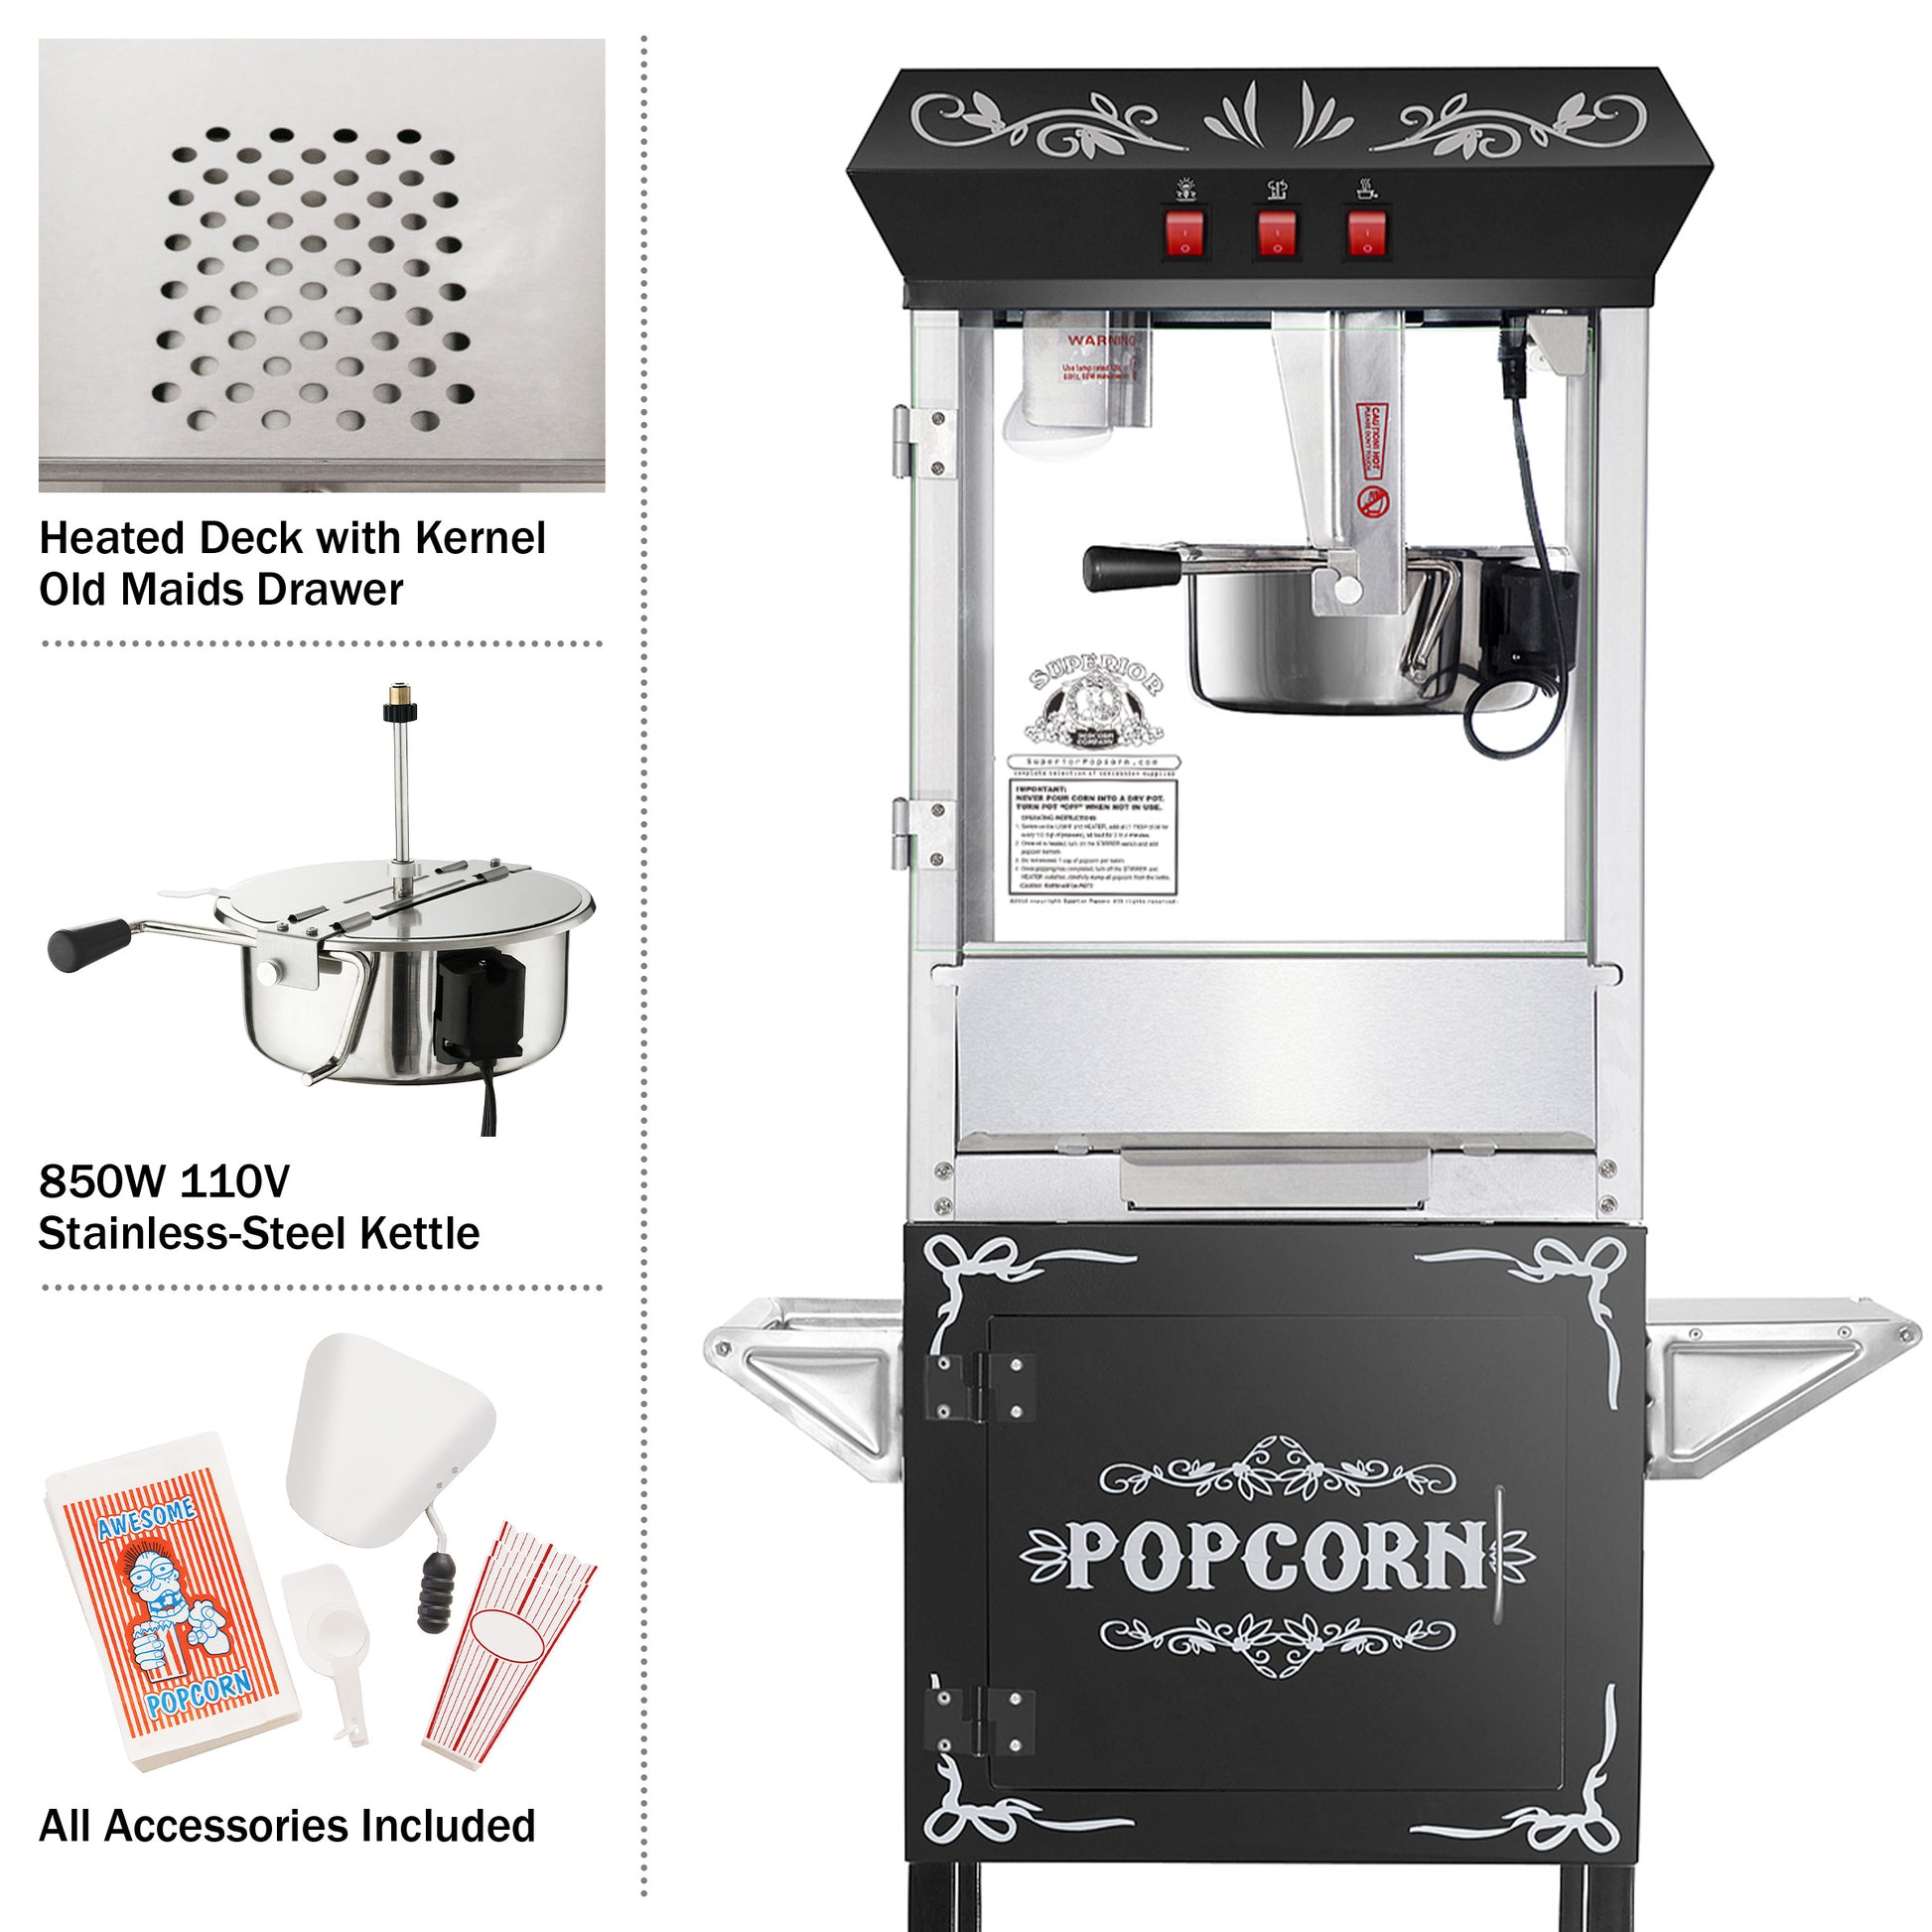 Theater Style Countertop Popcorn Machine, 8oz - Black